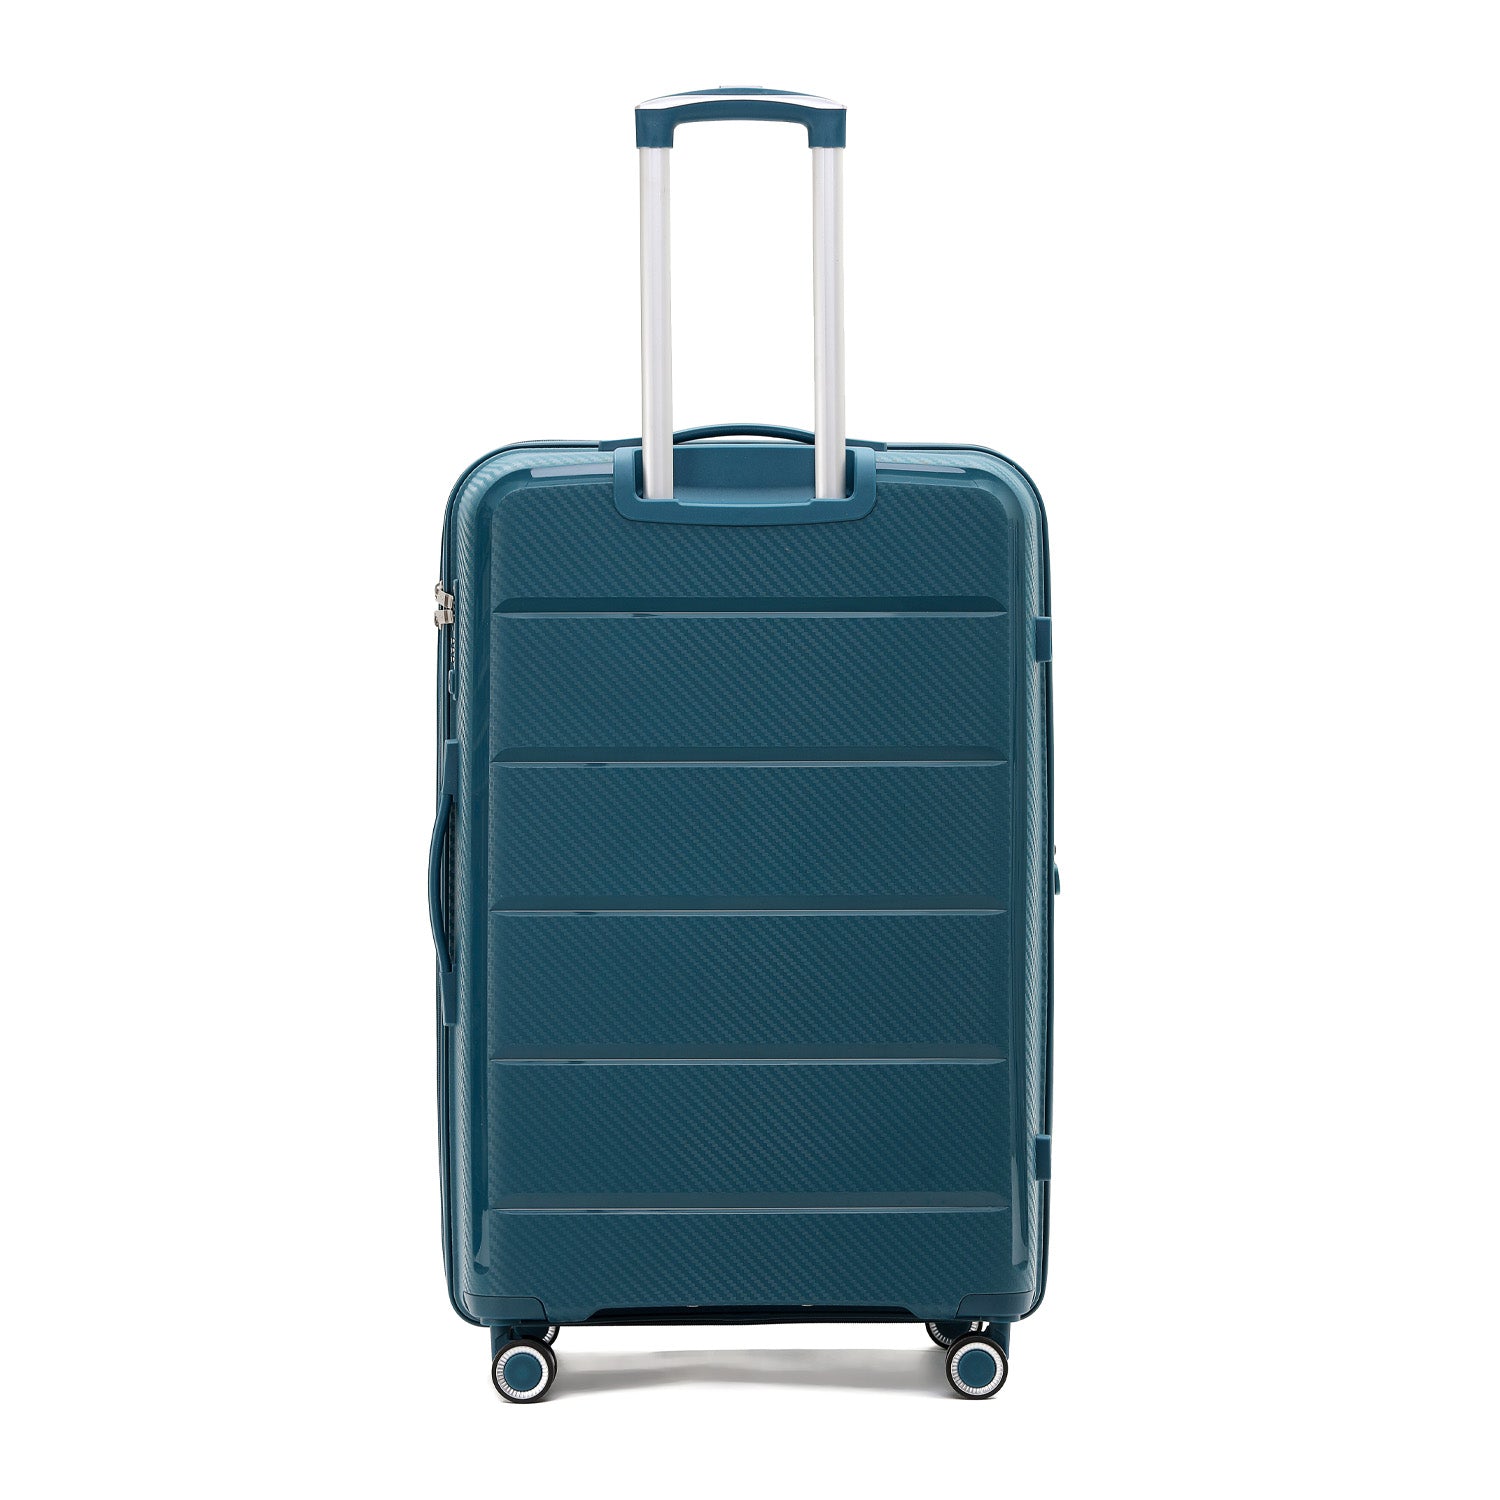 Paklite - PA7350 Large 75cm spinner suitcase - Blue-2